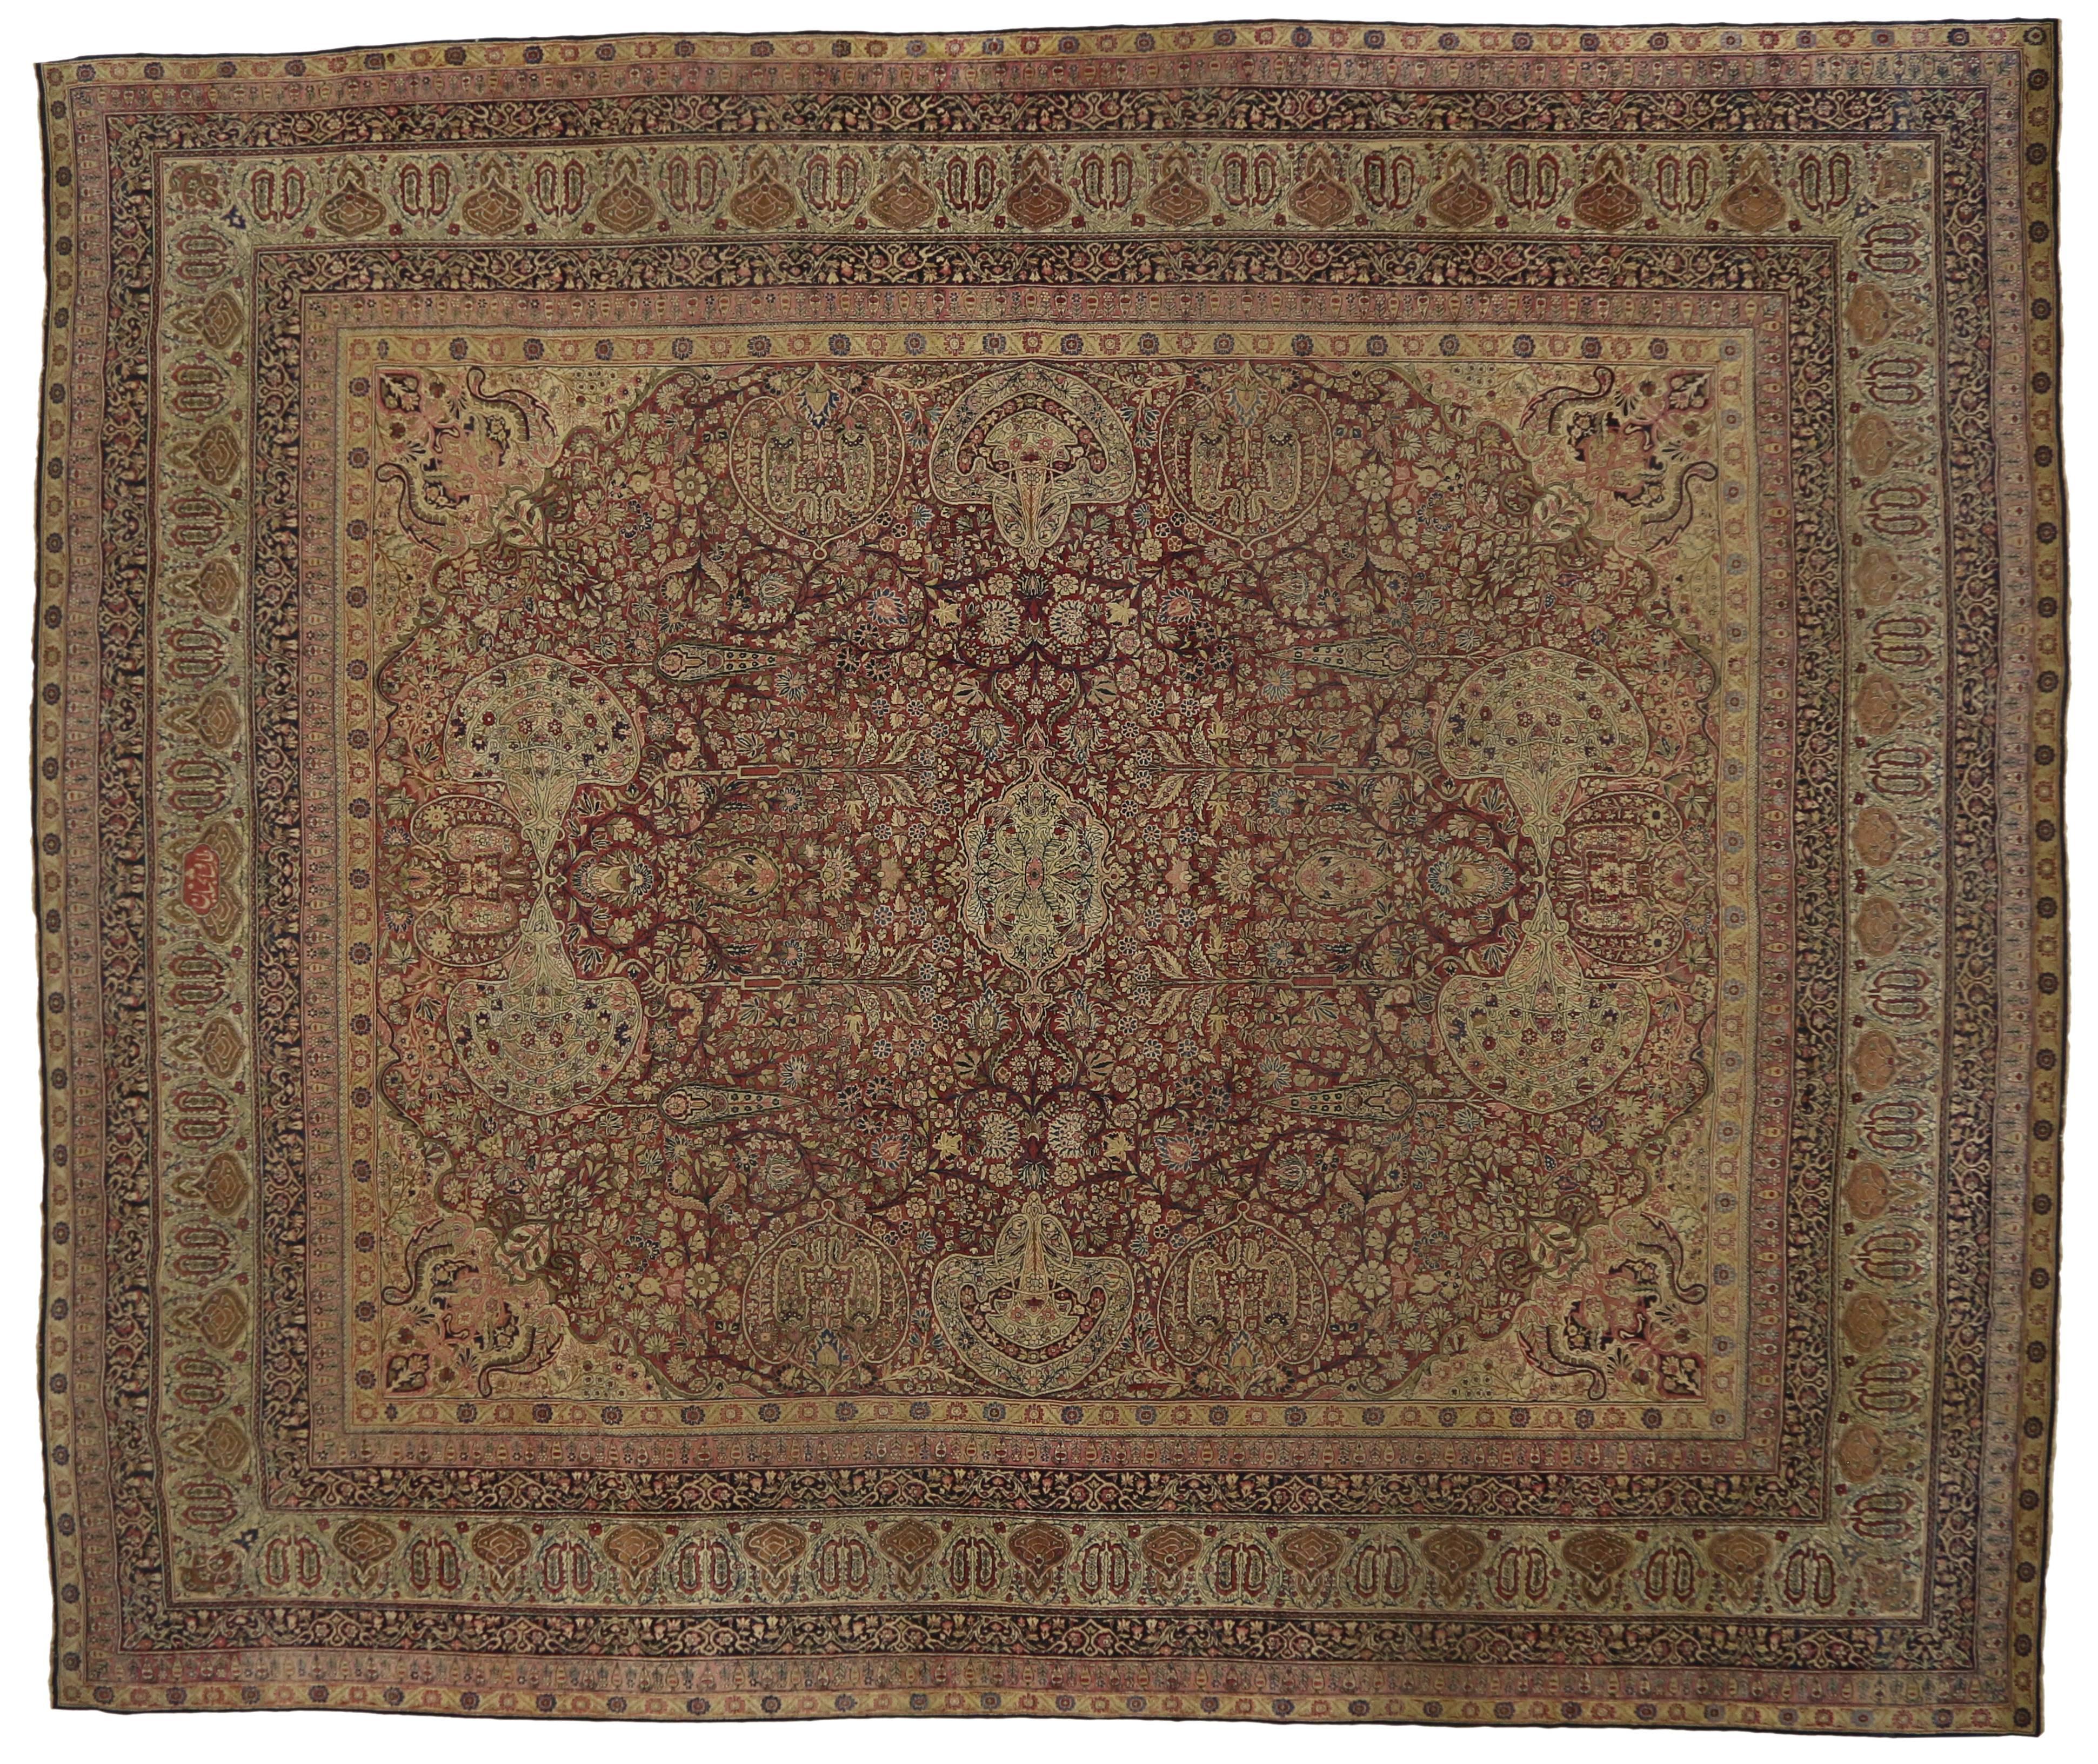 19th Century 1880s Oversized Antique Persian Kermanshah Rug, Hotel Lobby Size Carpet For Sale